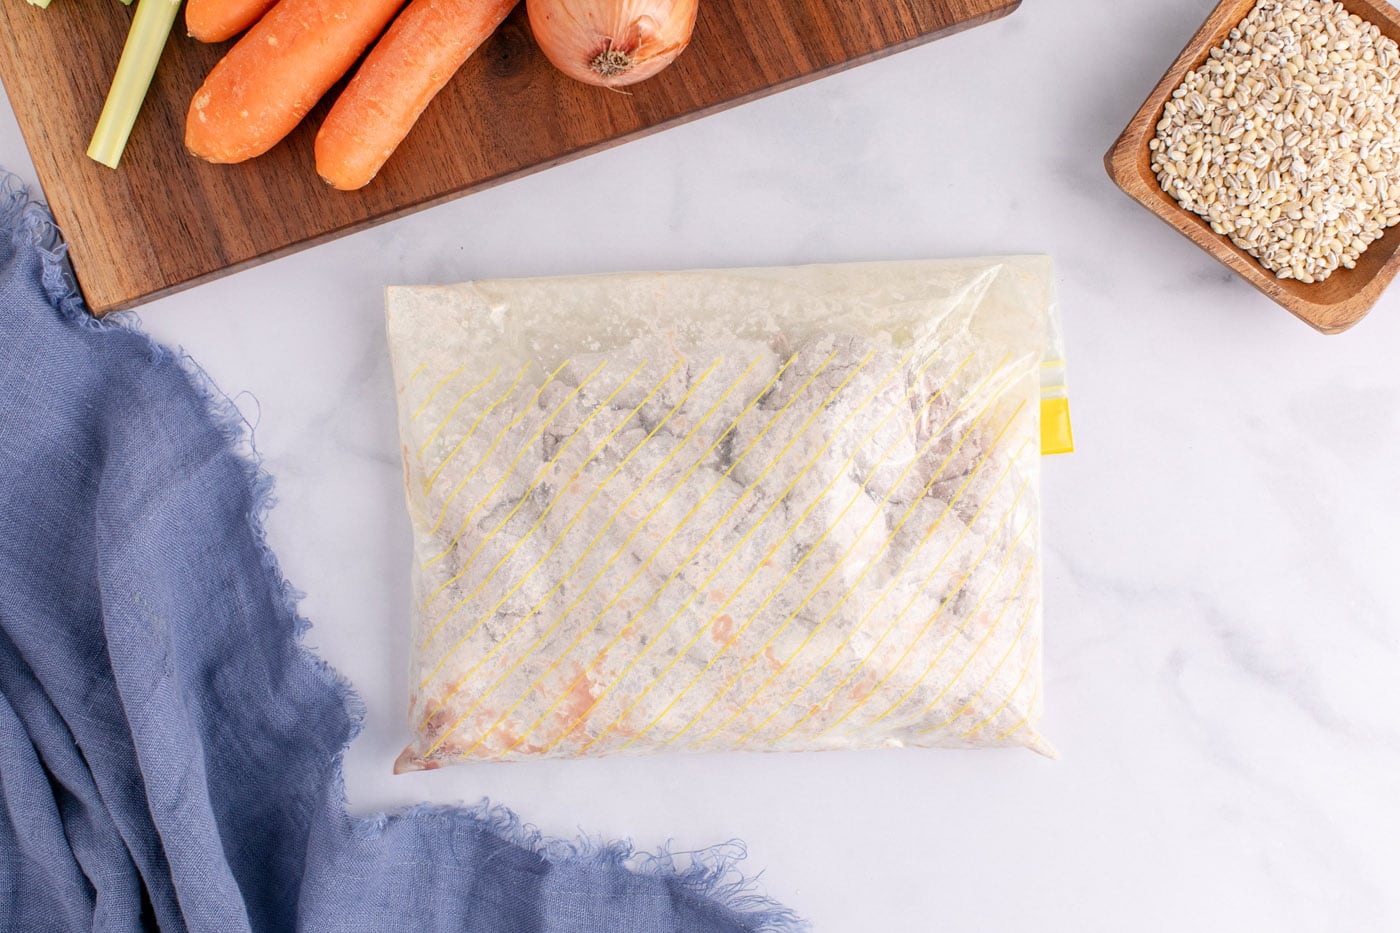 ziploc bag with flour coated beef cubes